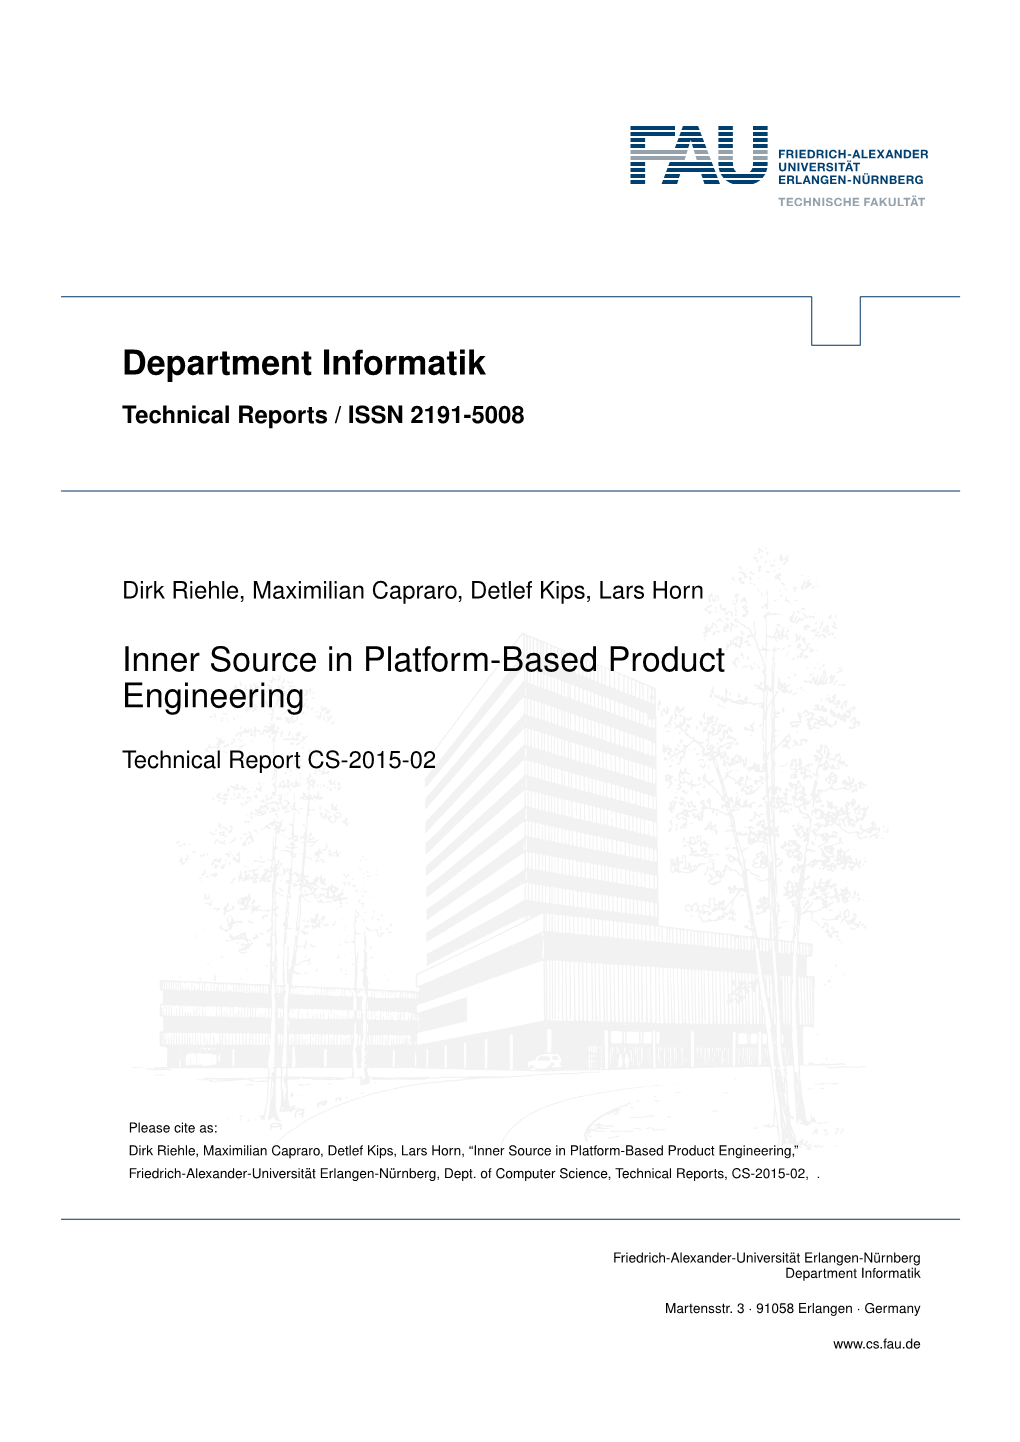 Department Informatik Inner Source in Platform-Based Product Engineering